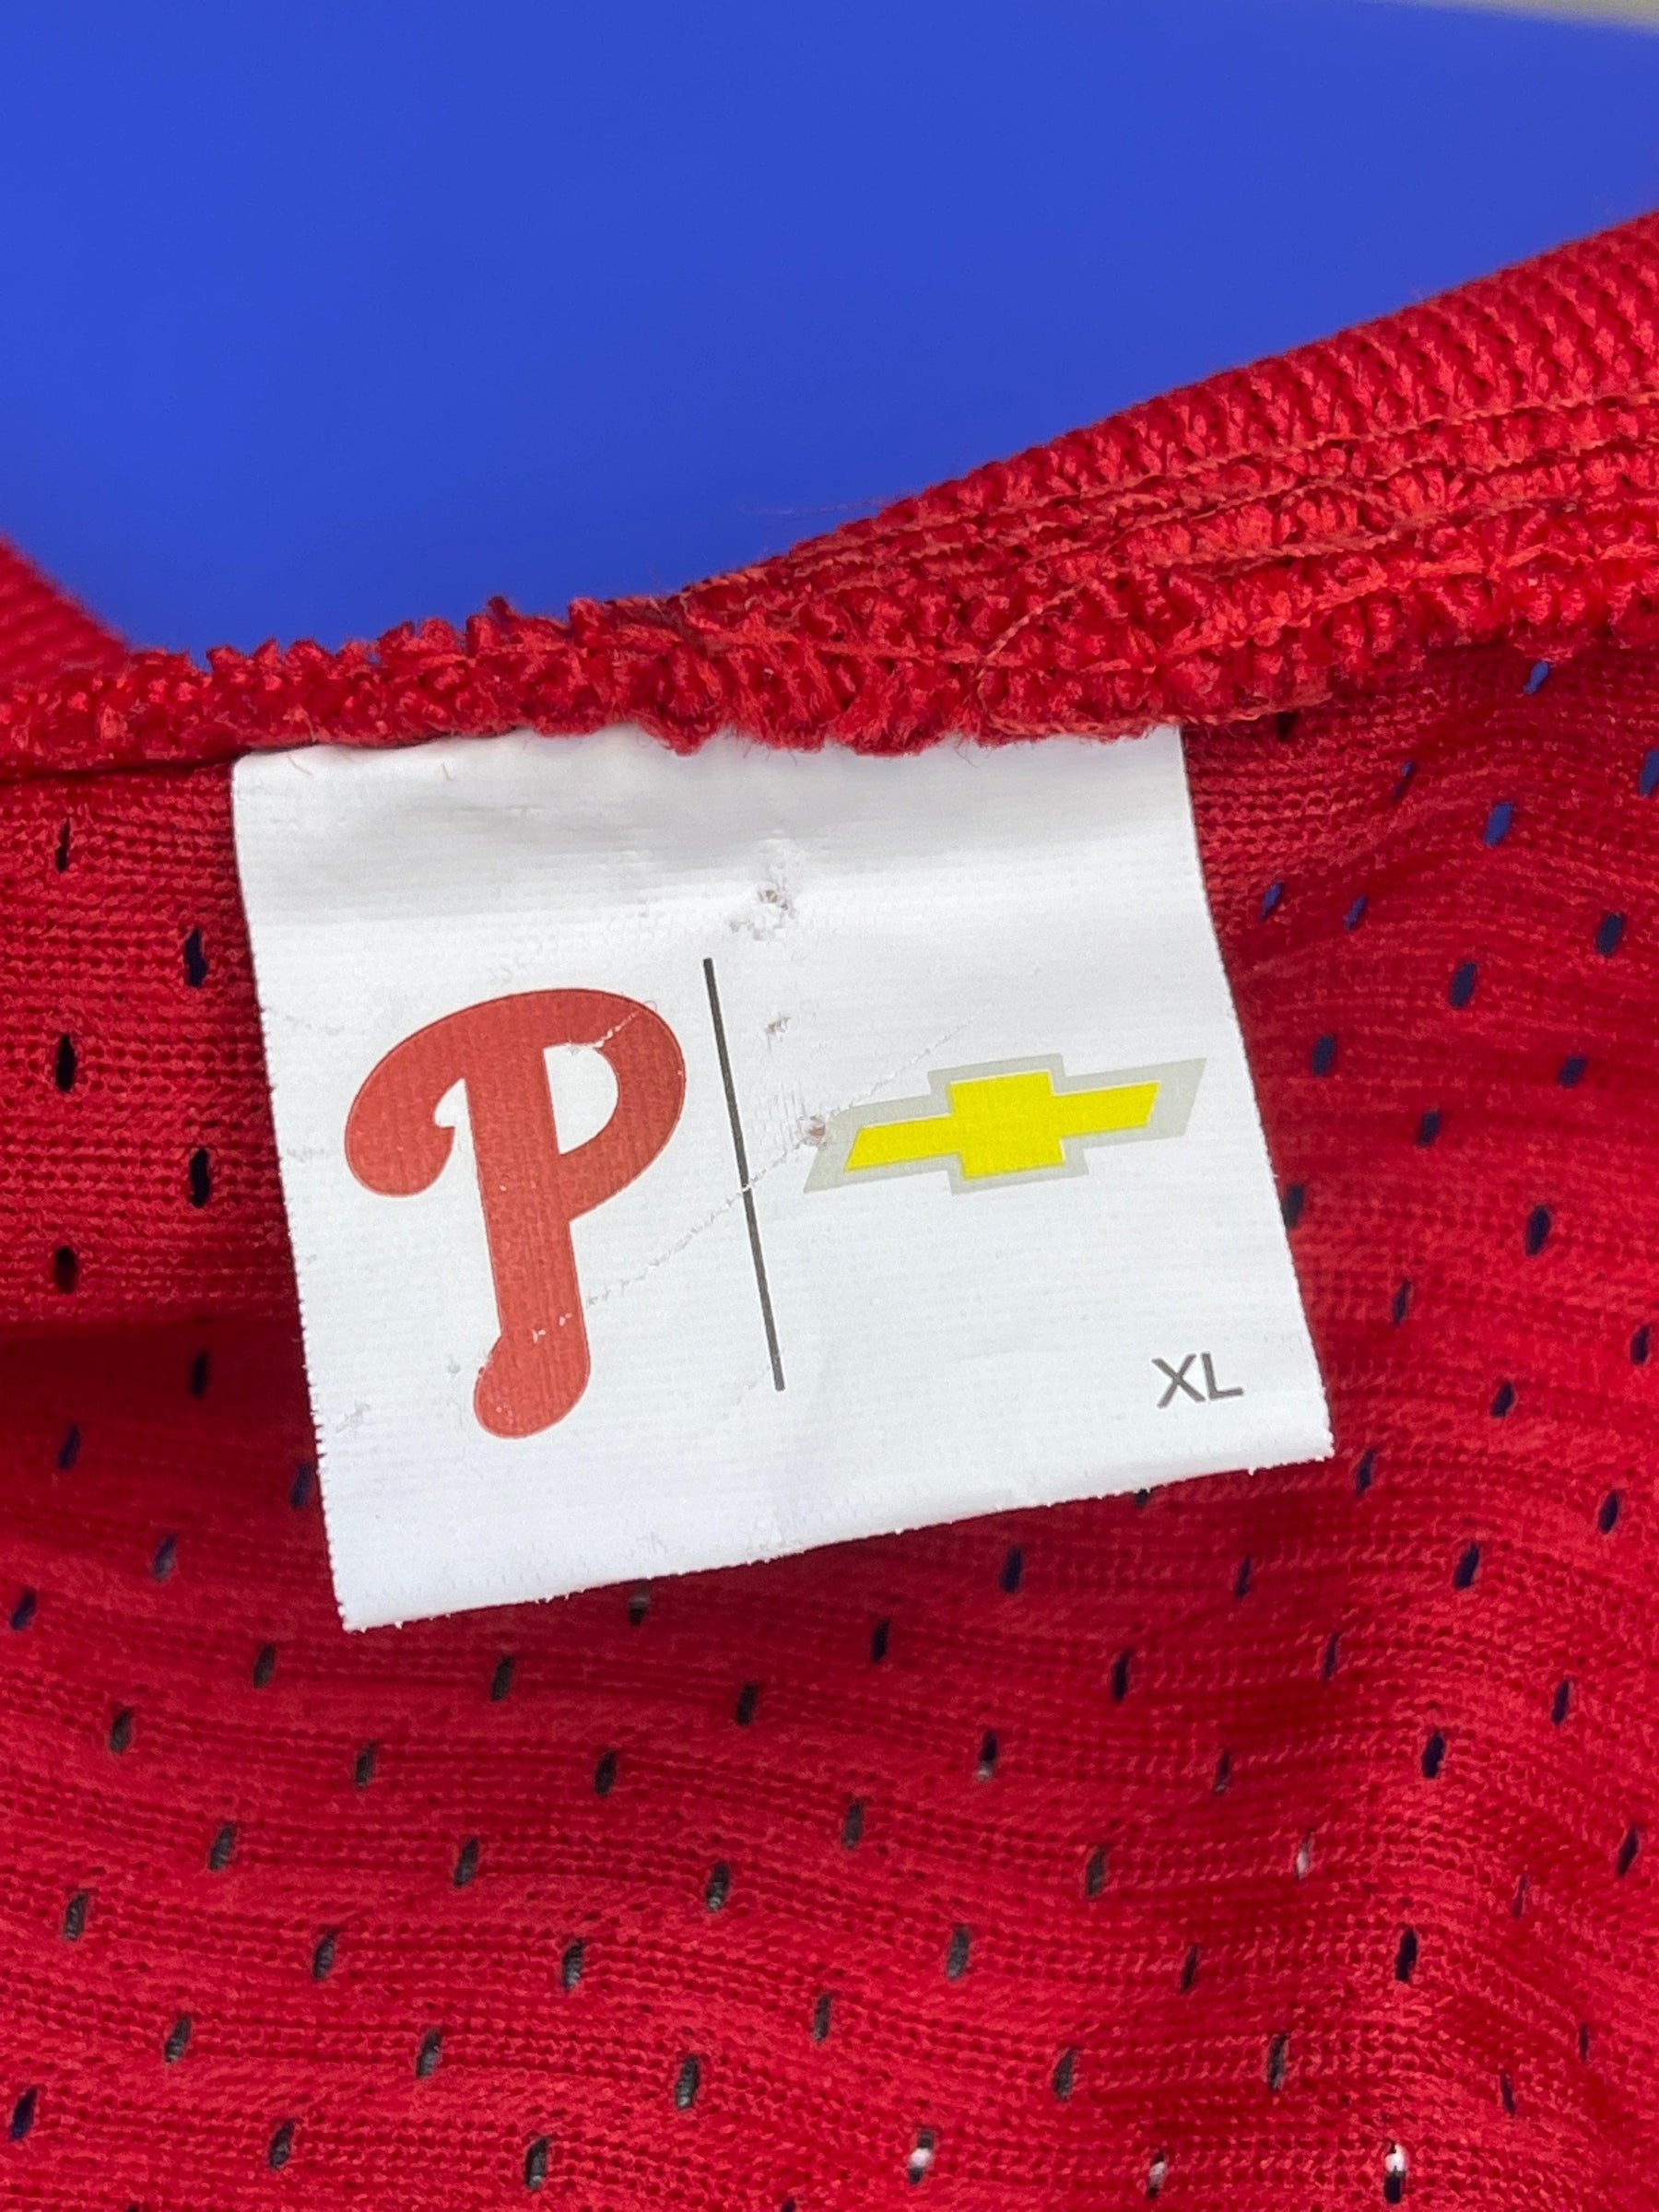 MLB Philadelphia Phillies #29 Jersey Style Pullover Top Chevrolet Men's X-Large